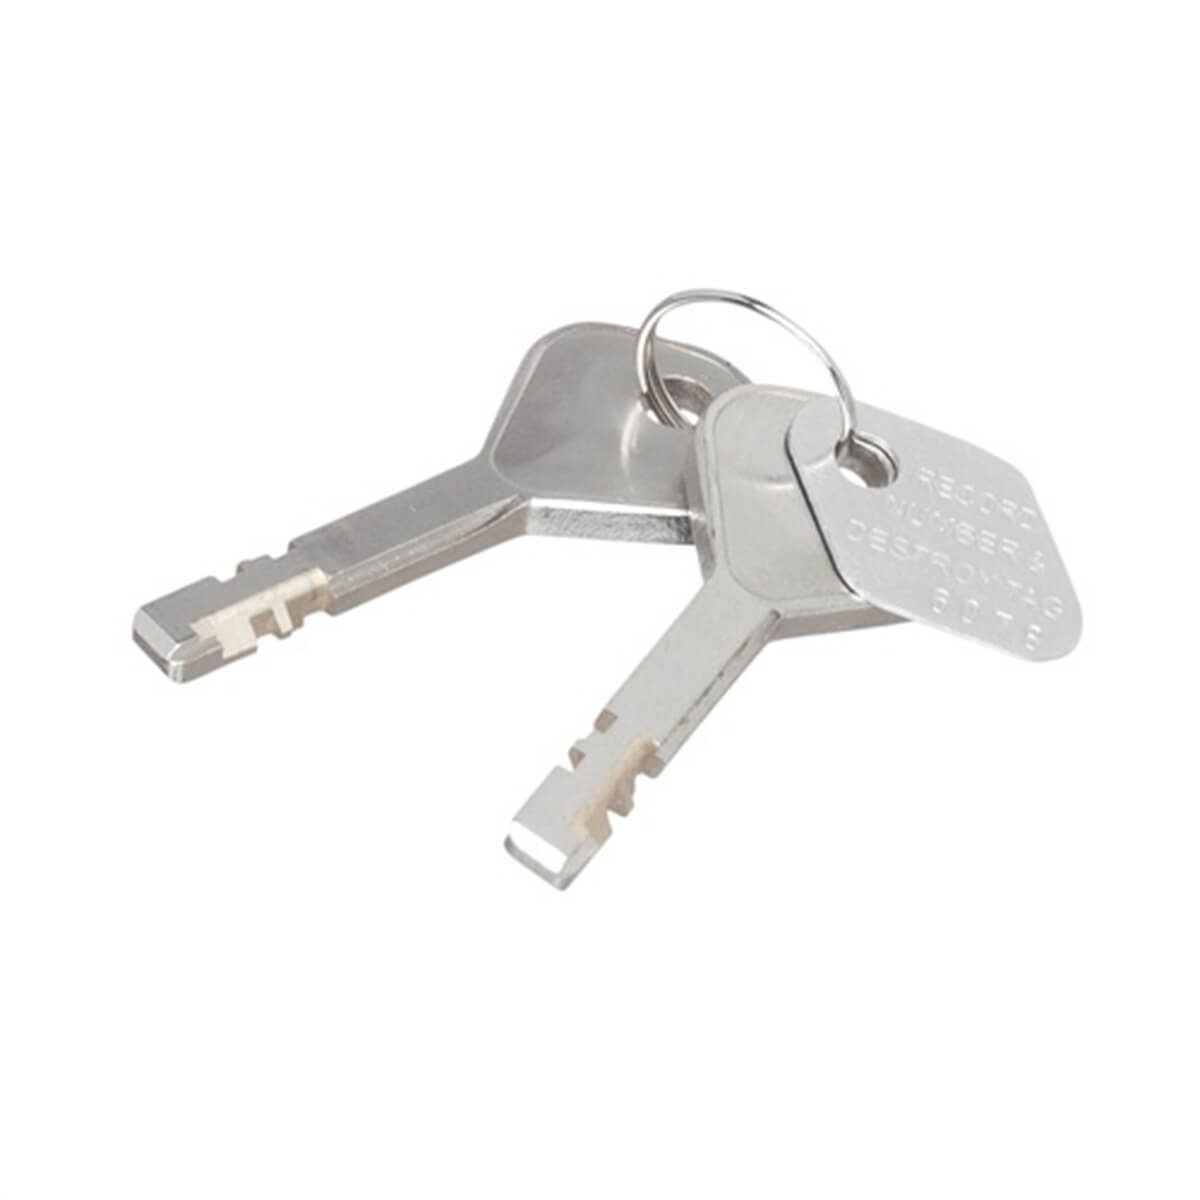 This Key can DESTROY a lock! 